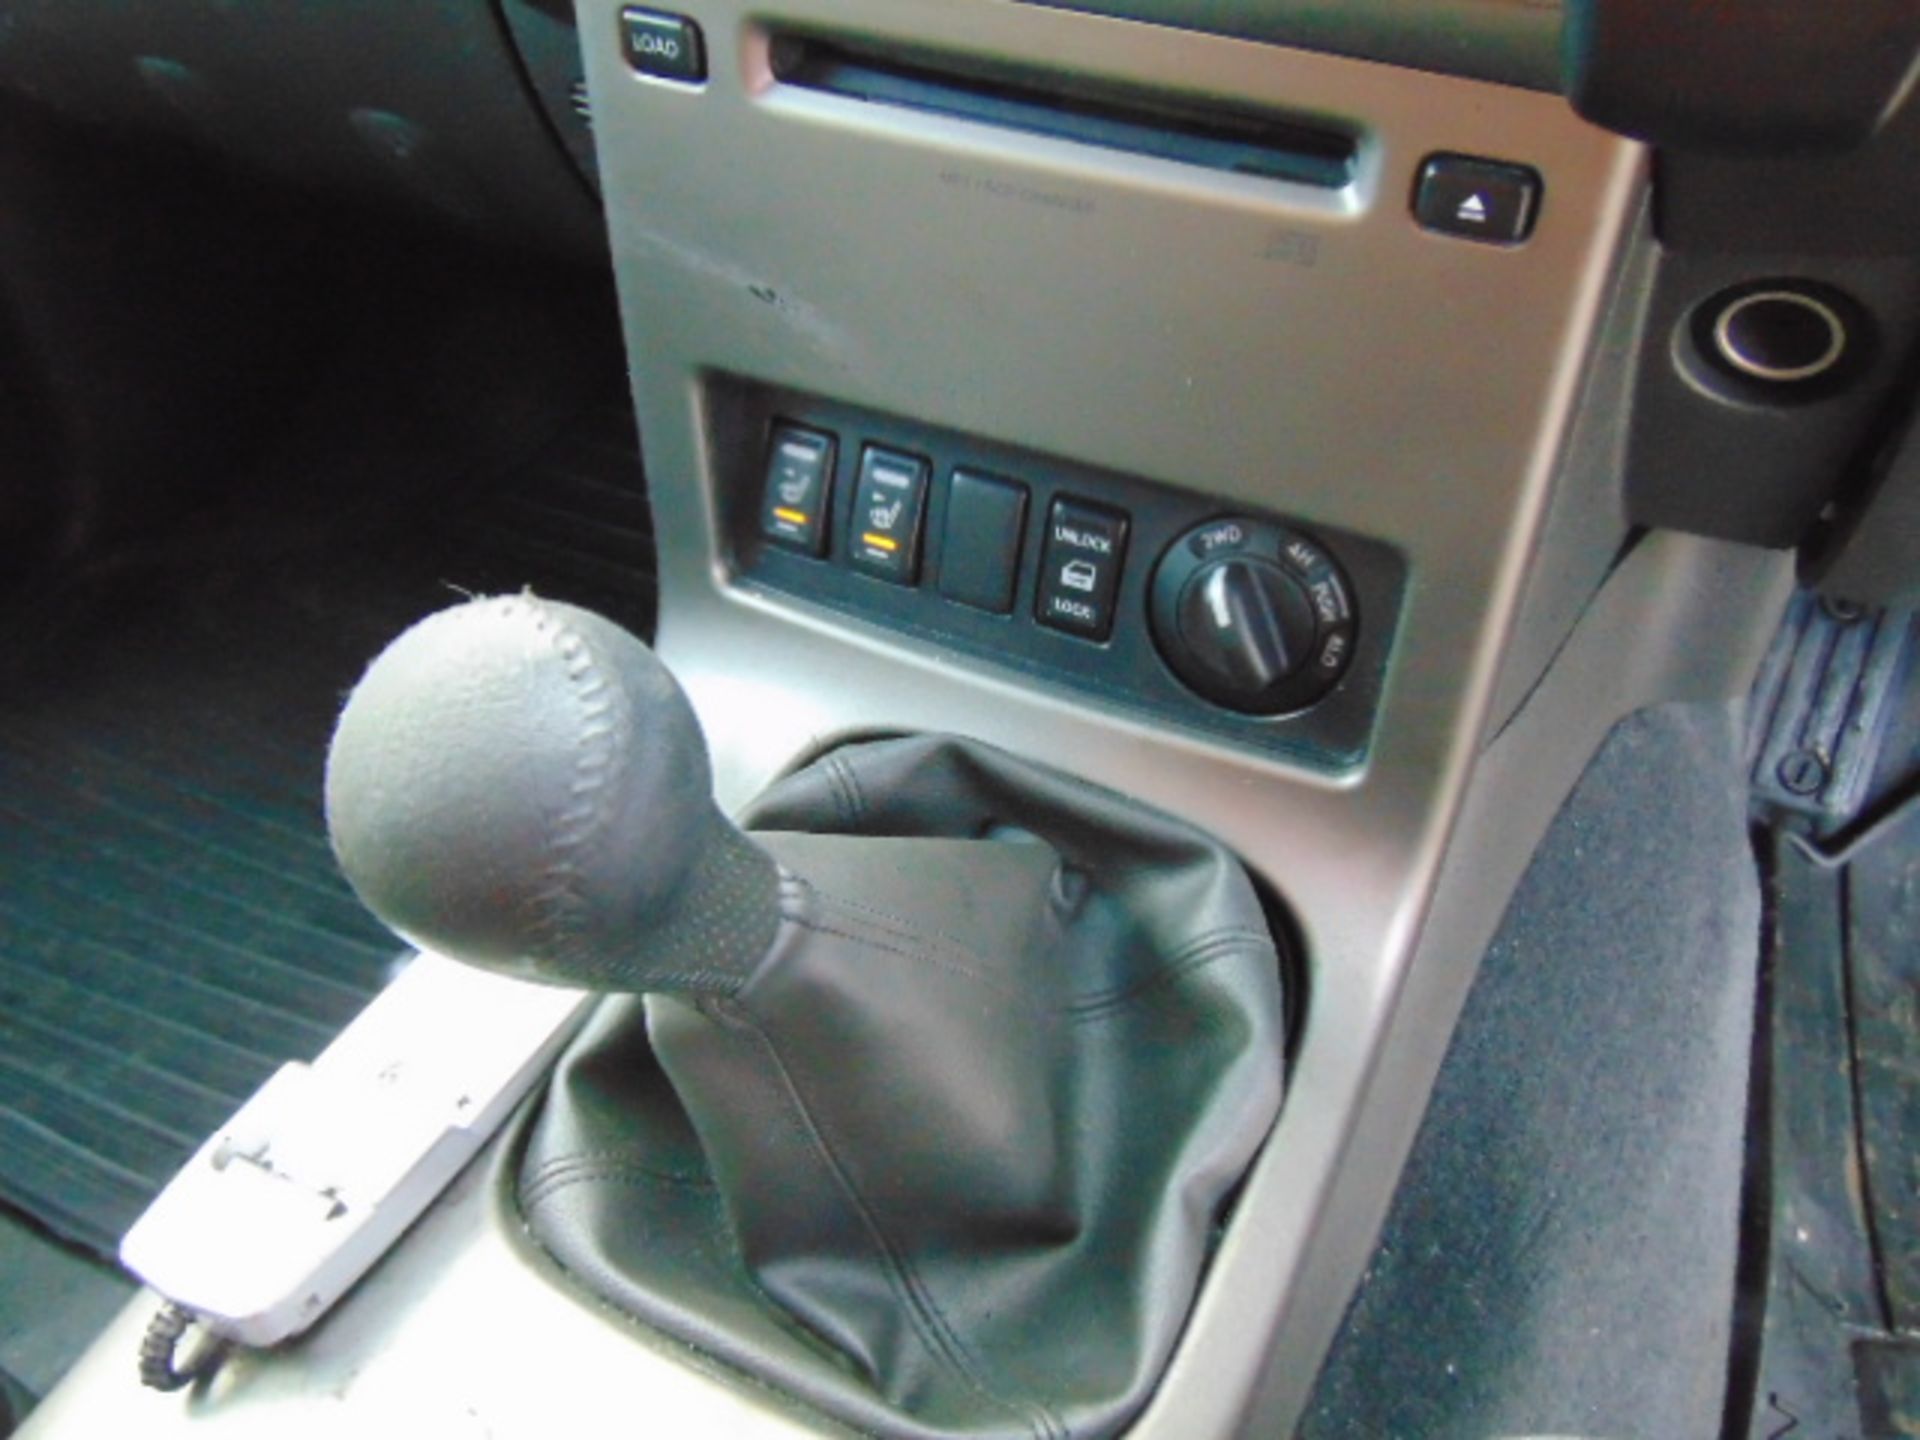 2008 Nissan Navara Aventura Double Cab 2.5 dCi Incident Response Vehicle - Image 13 of 24